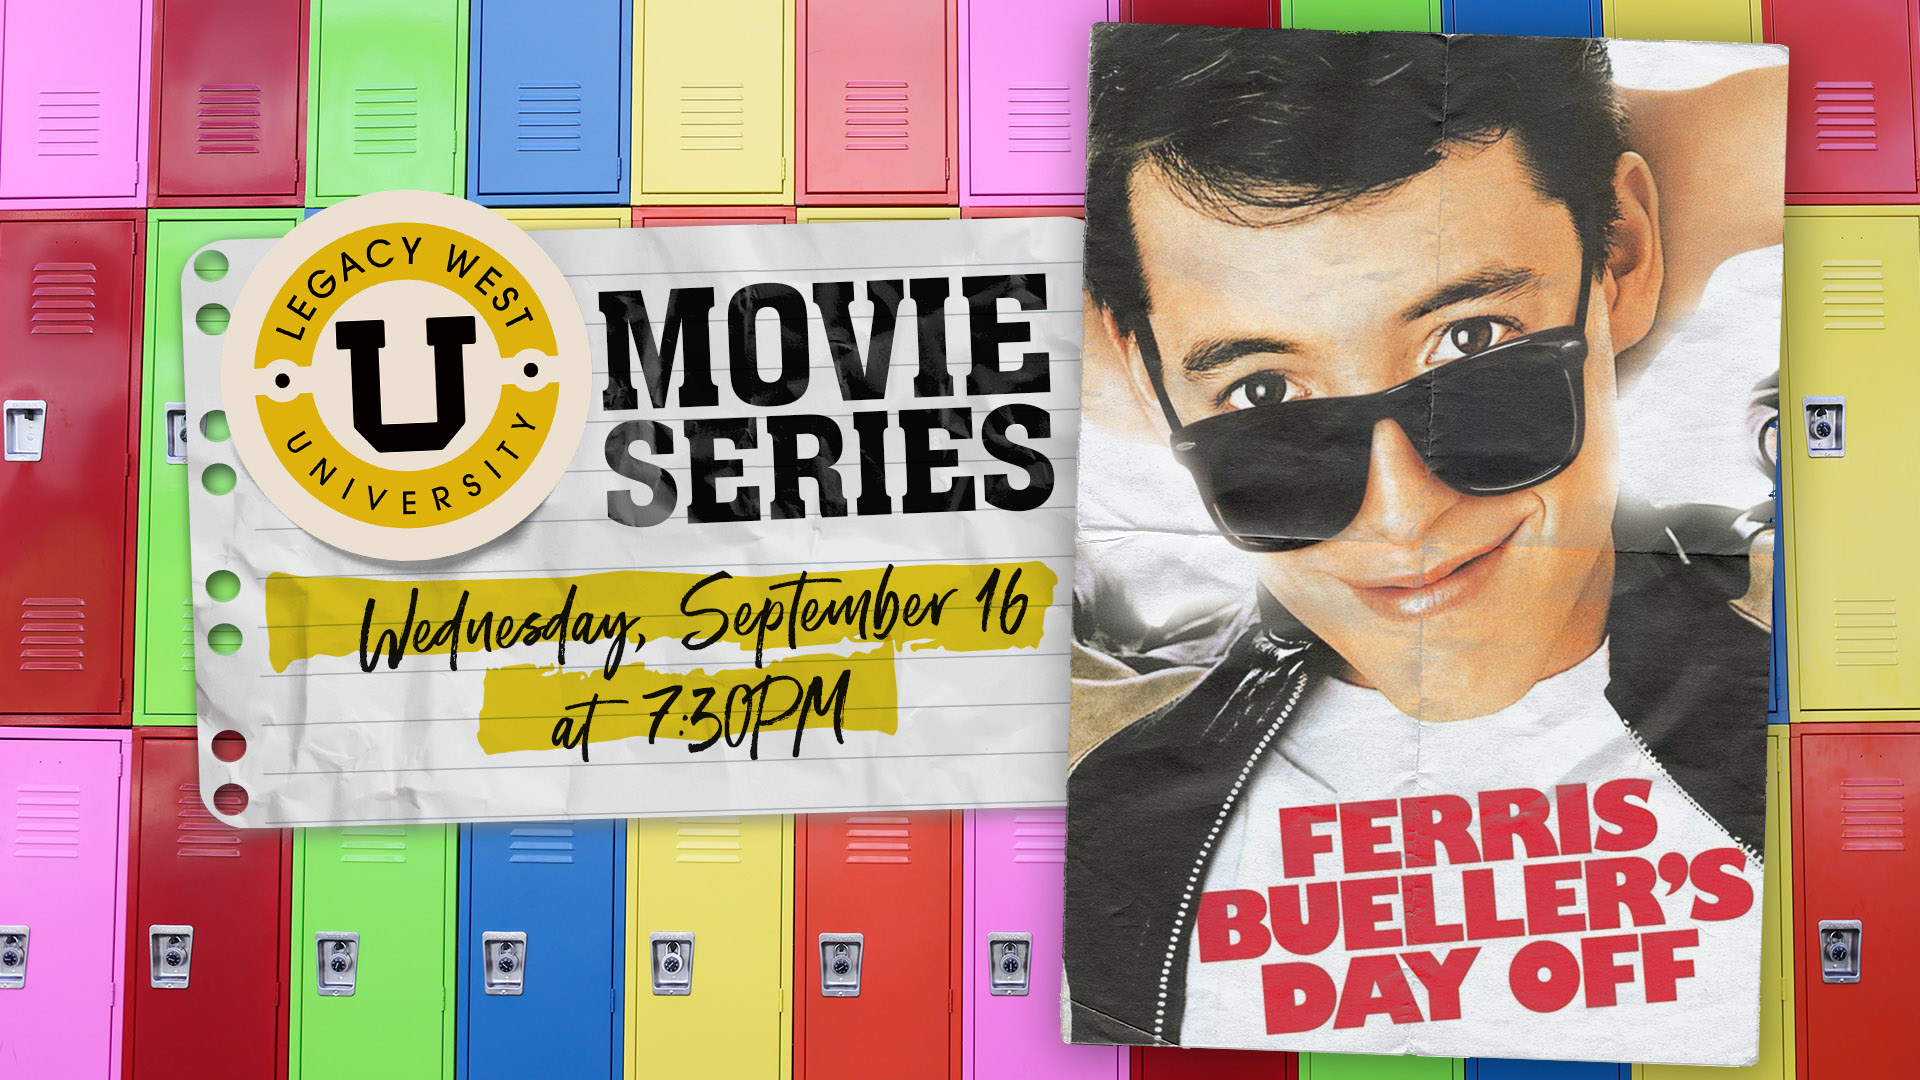 Legacy West University Movie Series: Ferris Bueller’s Day Off - hero